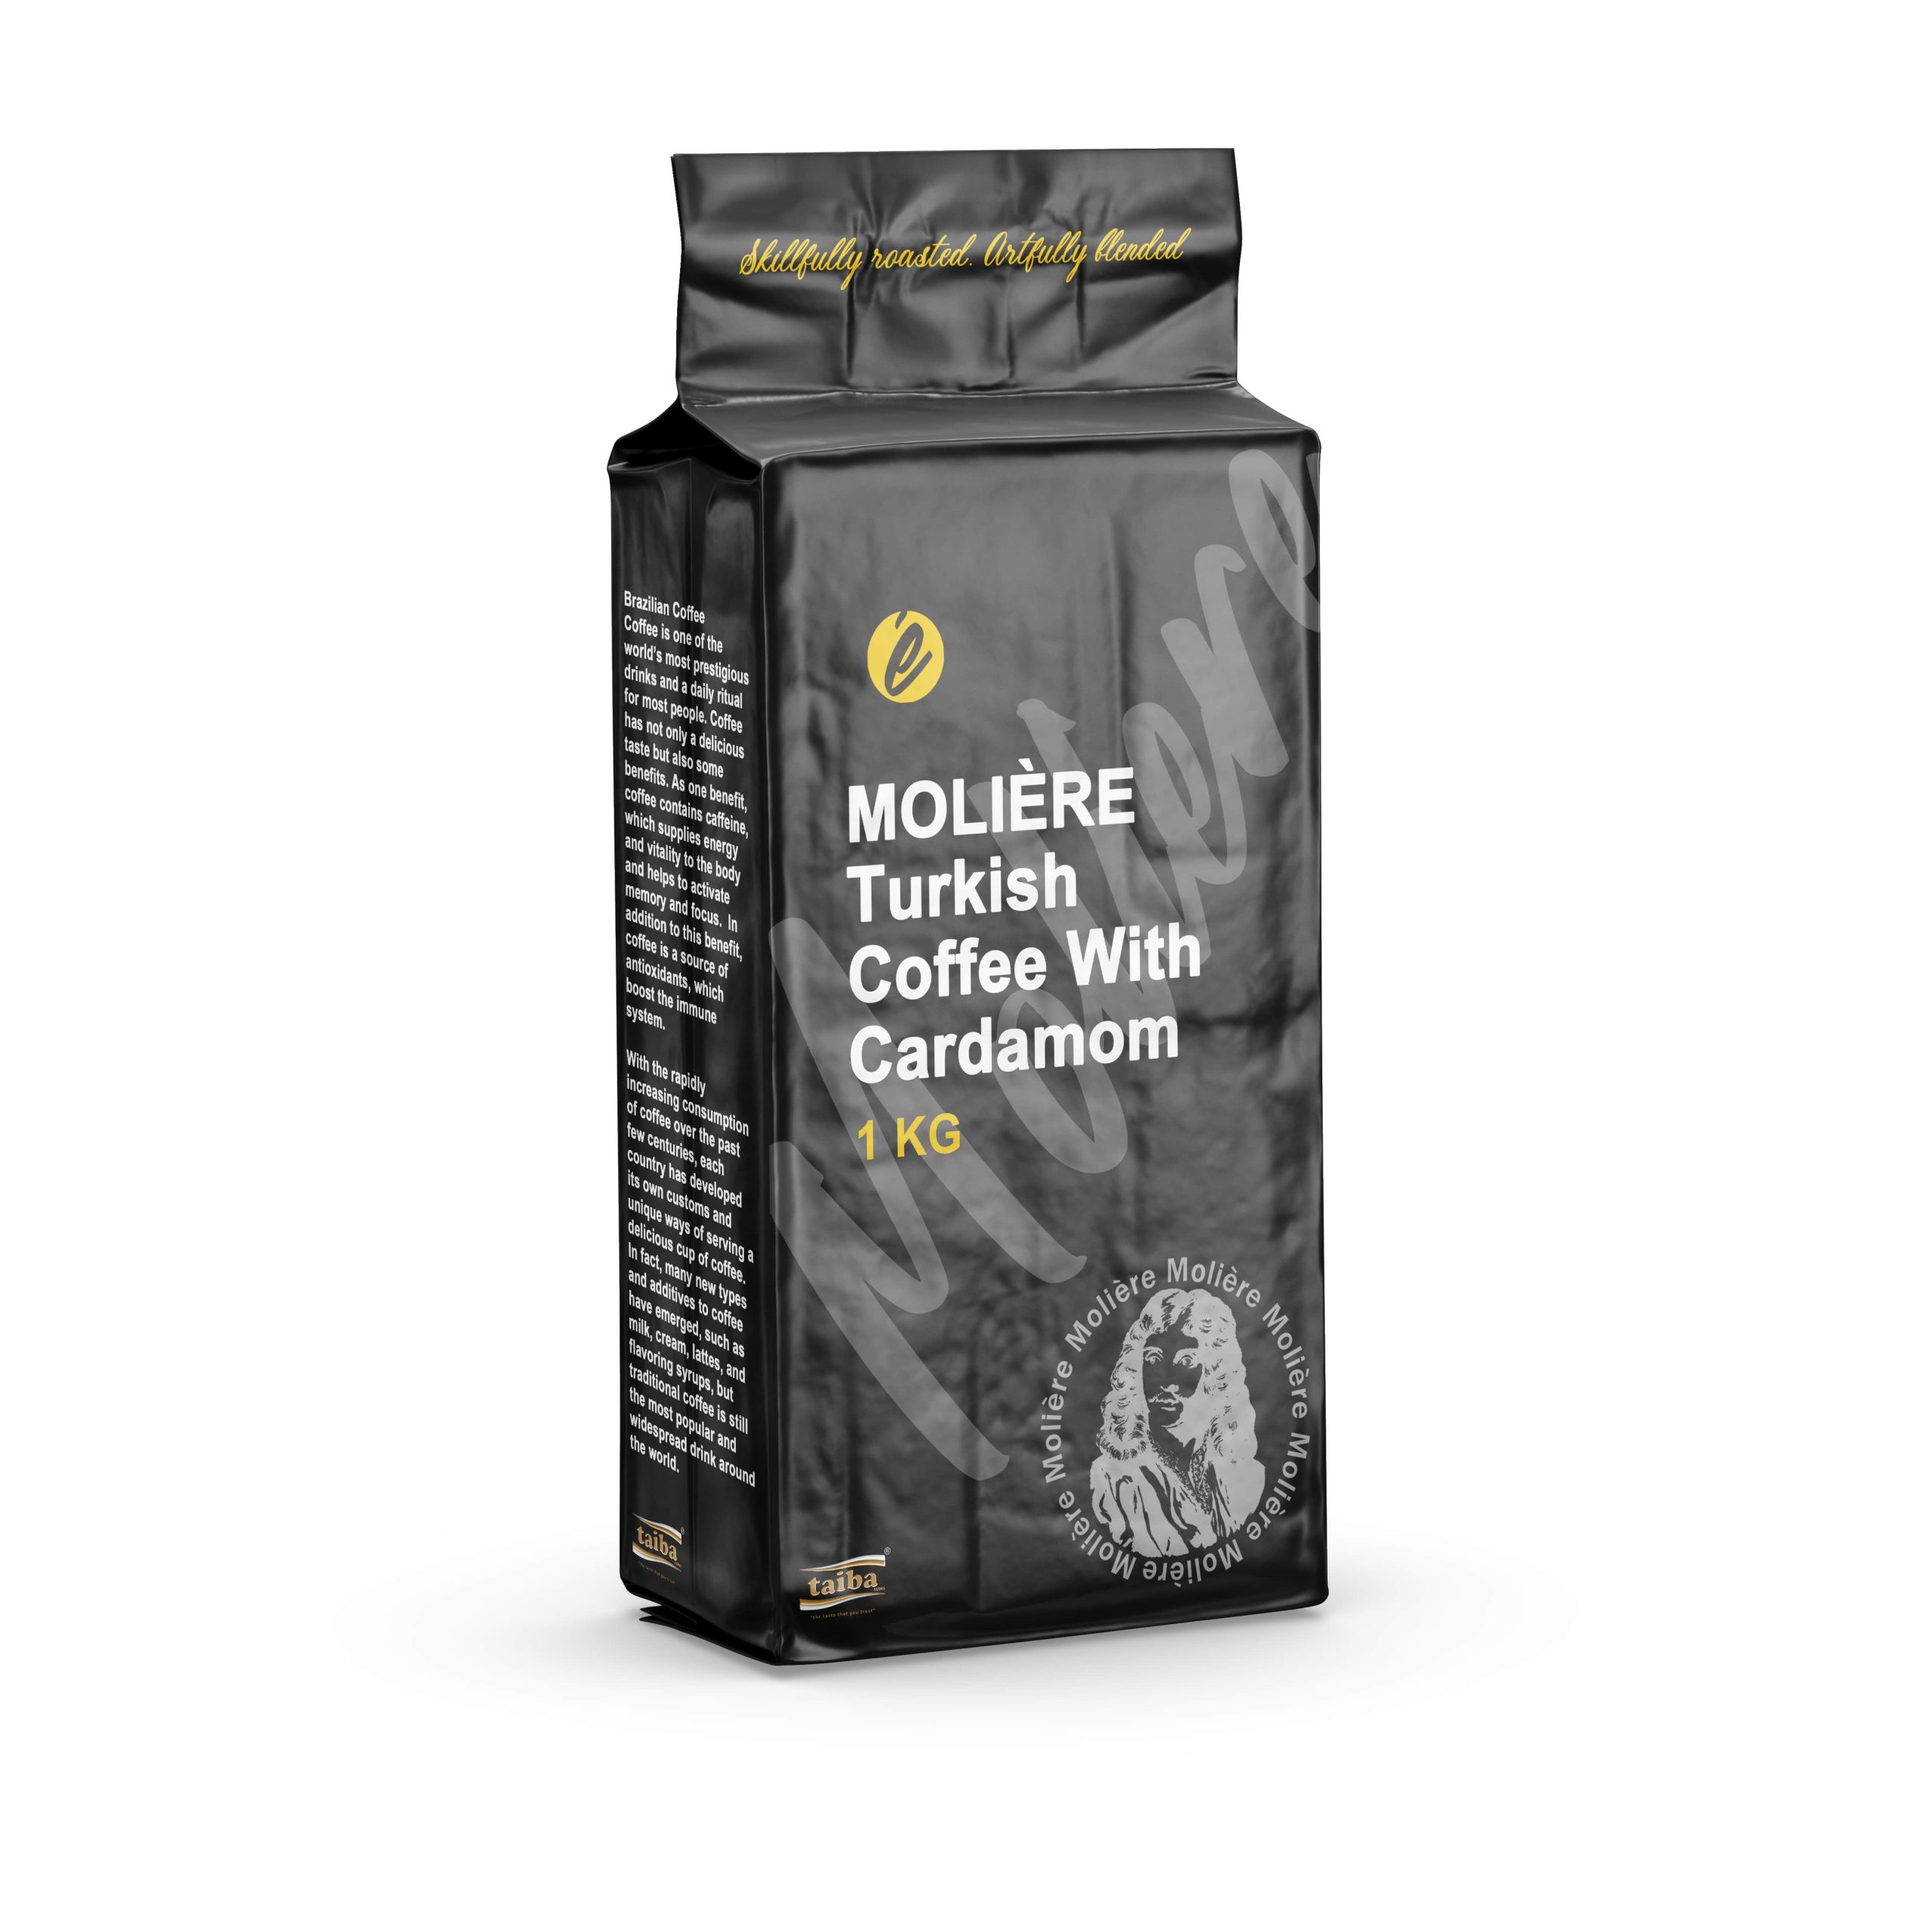 Online-Shopping-Turkish-Coffee-With-Cardamom-Online-Coffee-Suppliers-In-Brazil-Brazilian-Coffee-Brands-in-Brazil